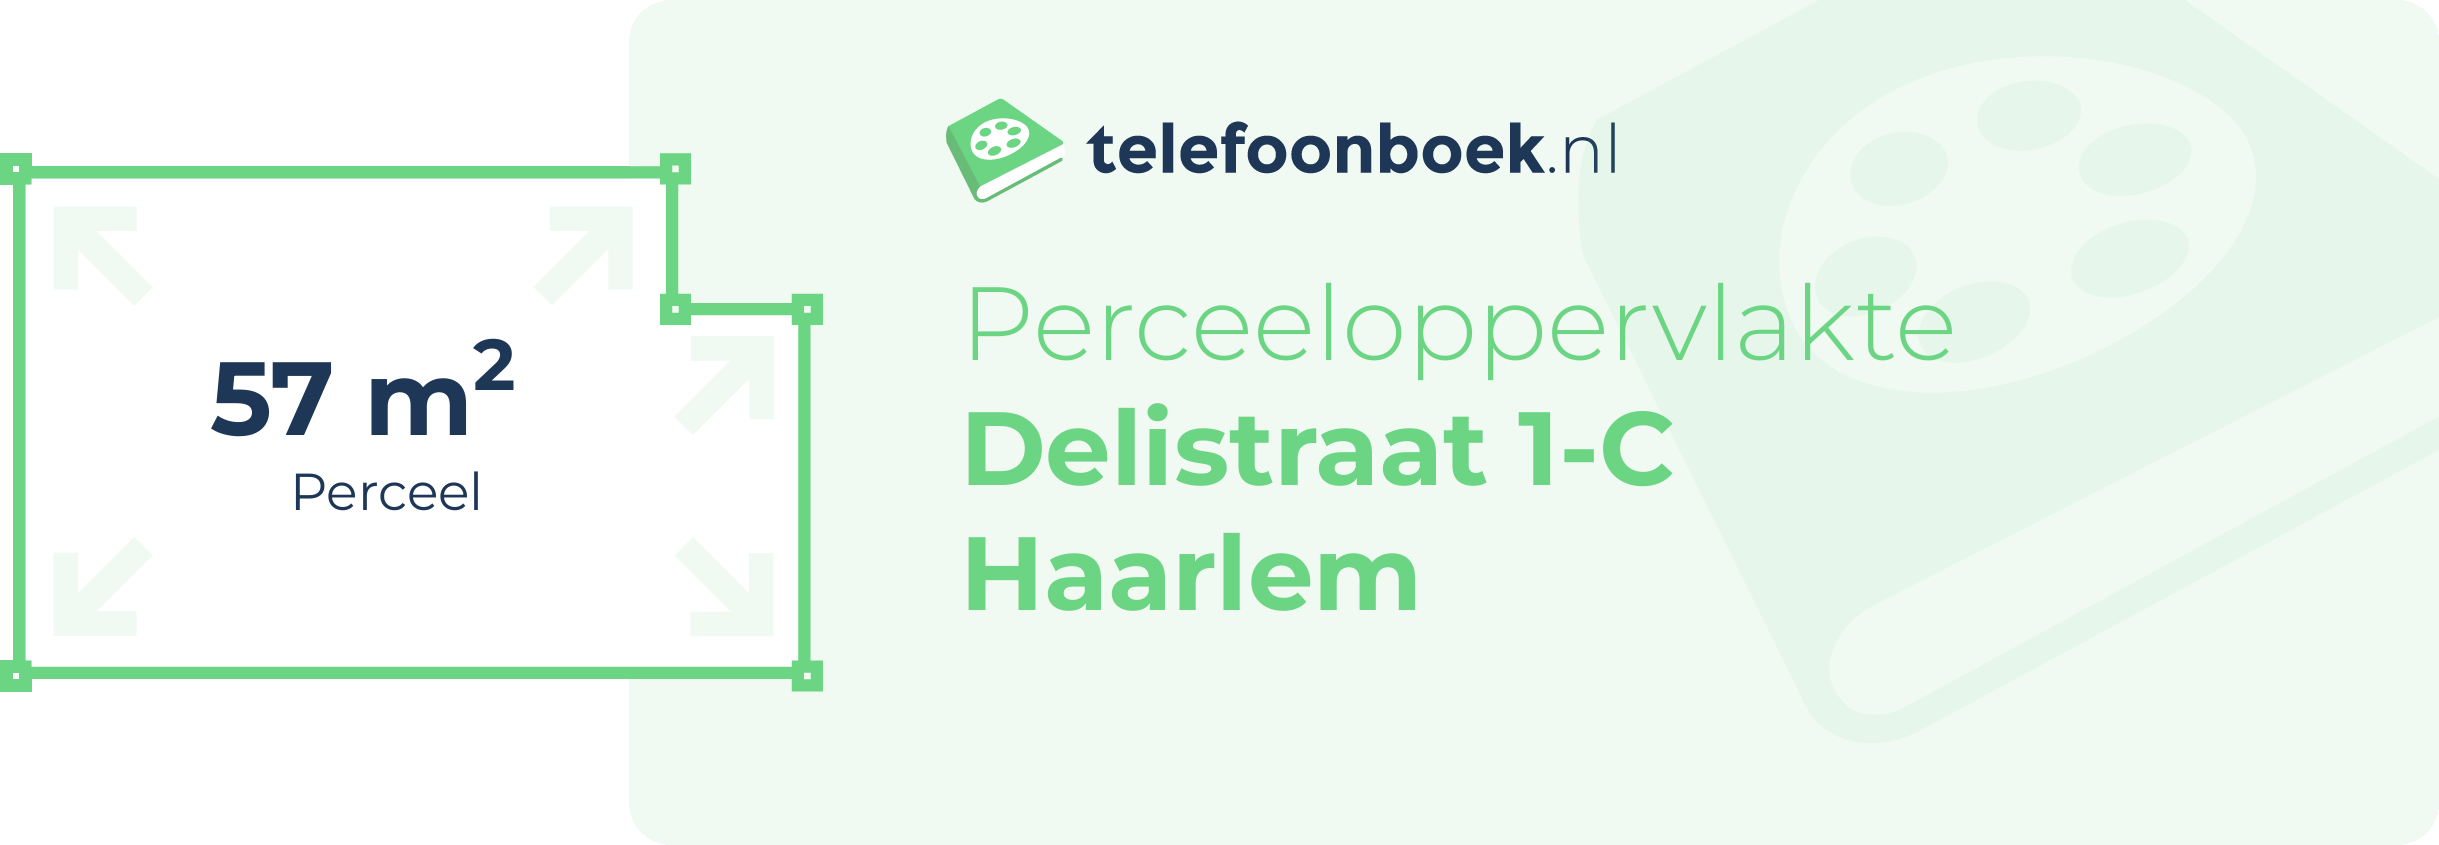 Perceeloppervlakte Delistraat 1-C Haarlem